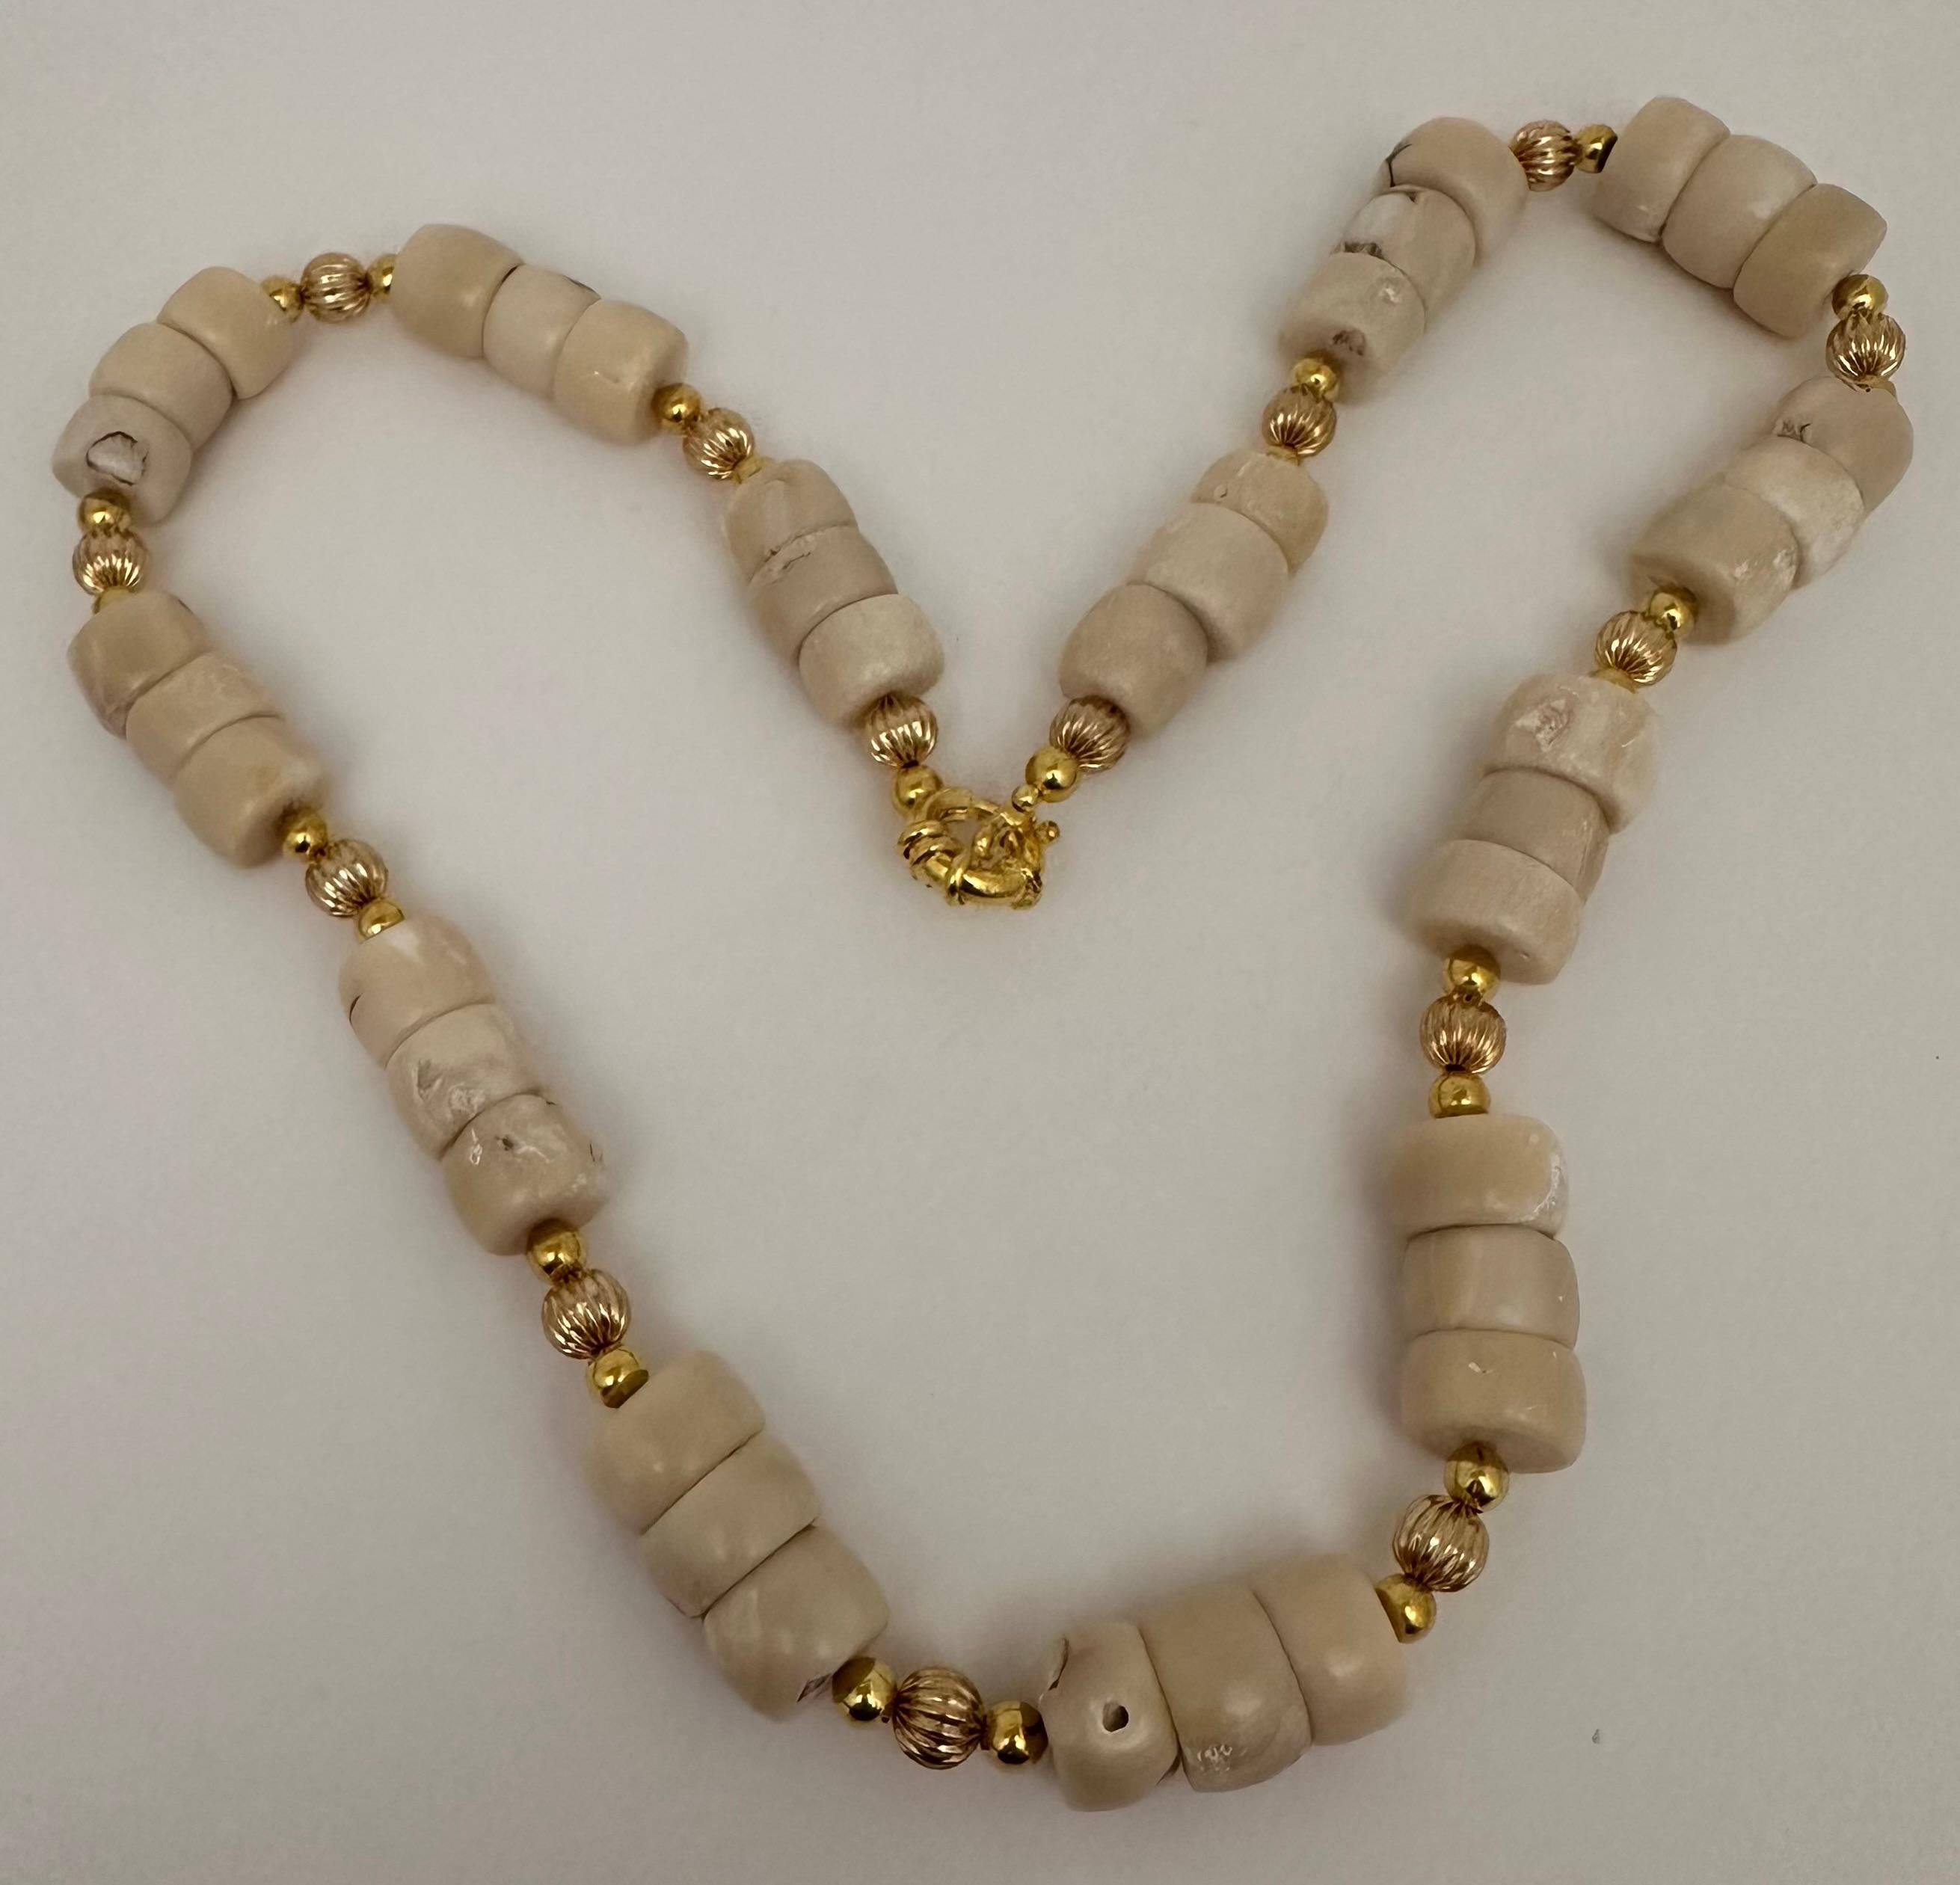 Handgefertigte vergoldete Perlen & weiße Korallenperlen in Fassform Perlen 26